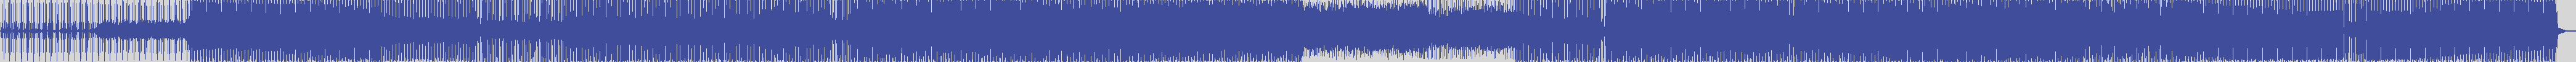 atomic_recordings [AR016] Lello B. - Hu Do It [Original Mix] audio wave form